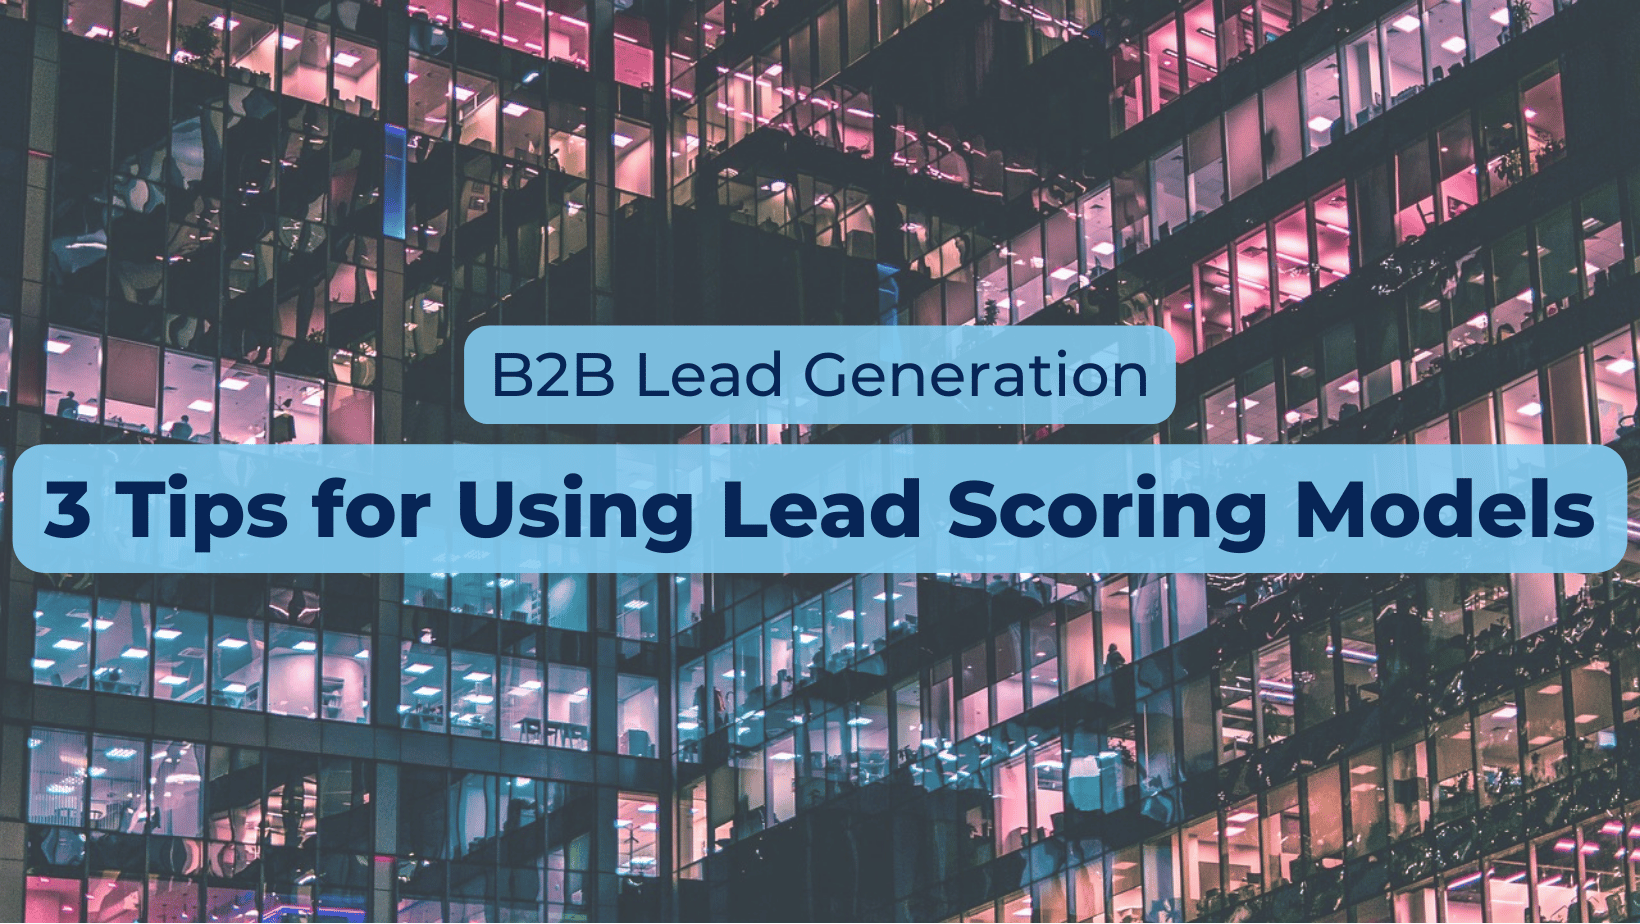 B2B Lead Generation: 3 Tips for Using Lead Scoring Models